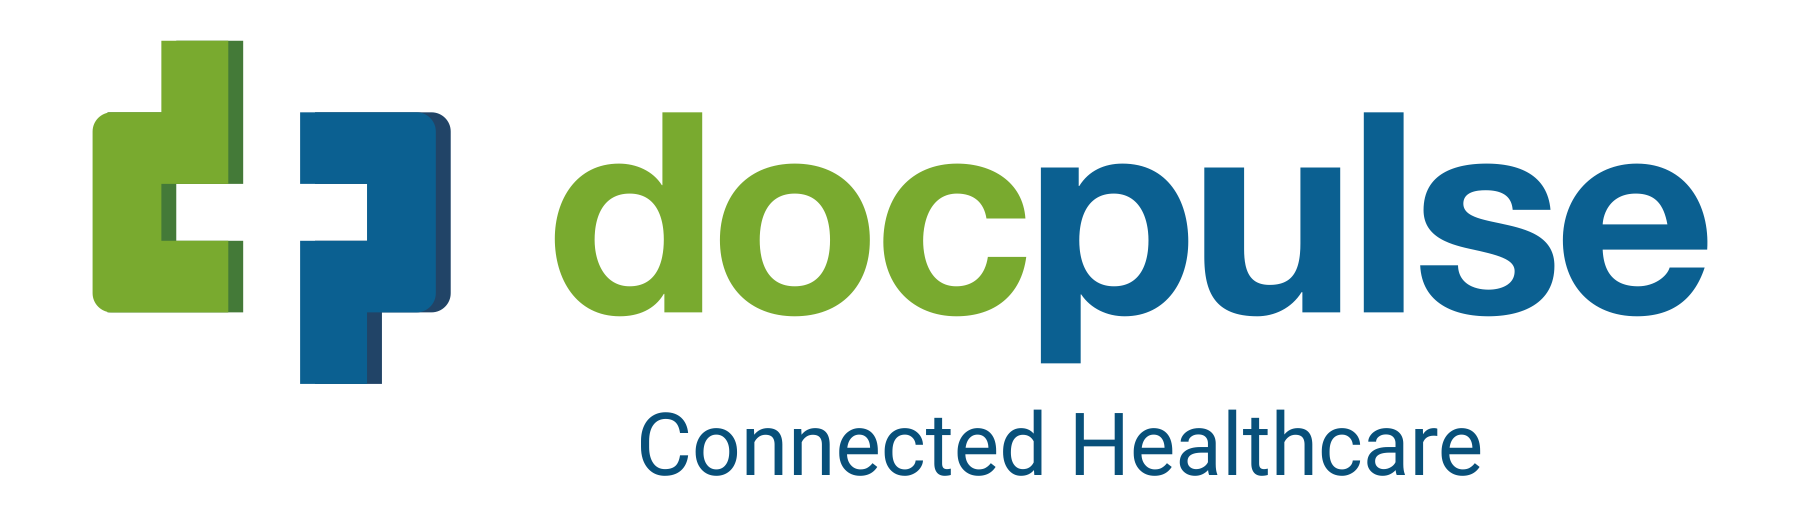 docpulse logo